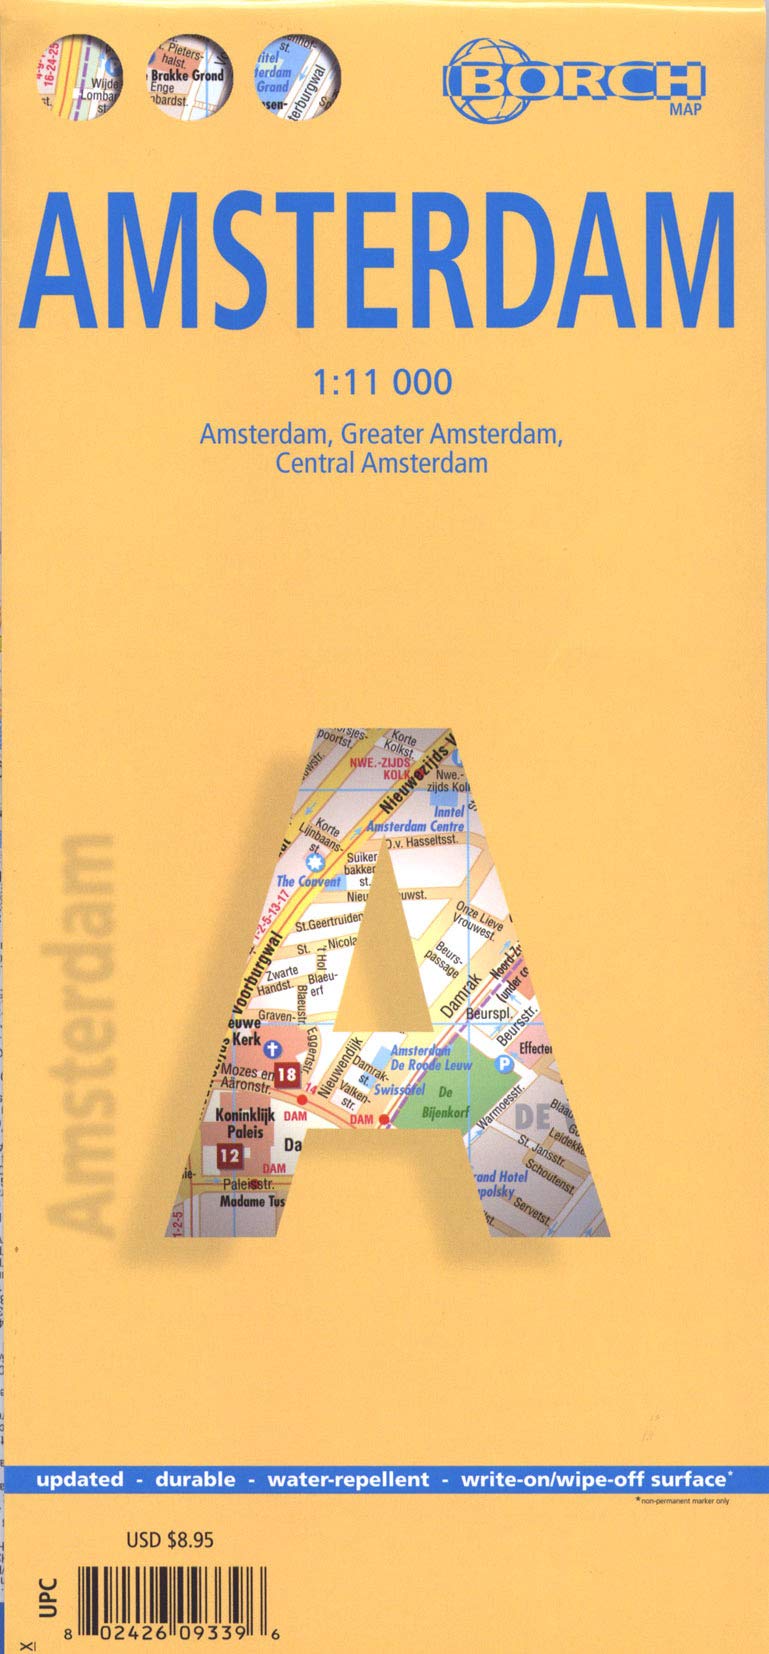 Amsterdam Borch City Map